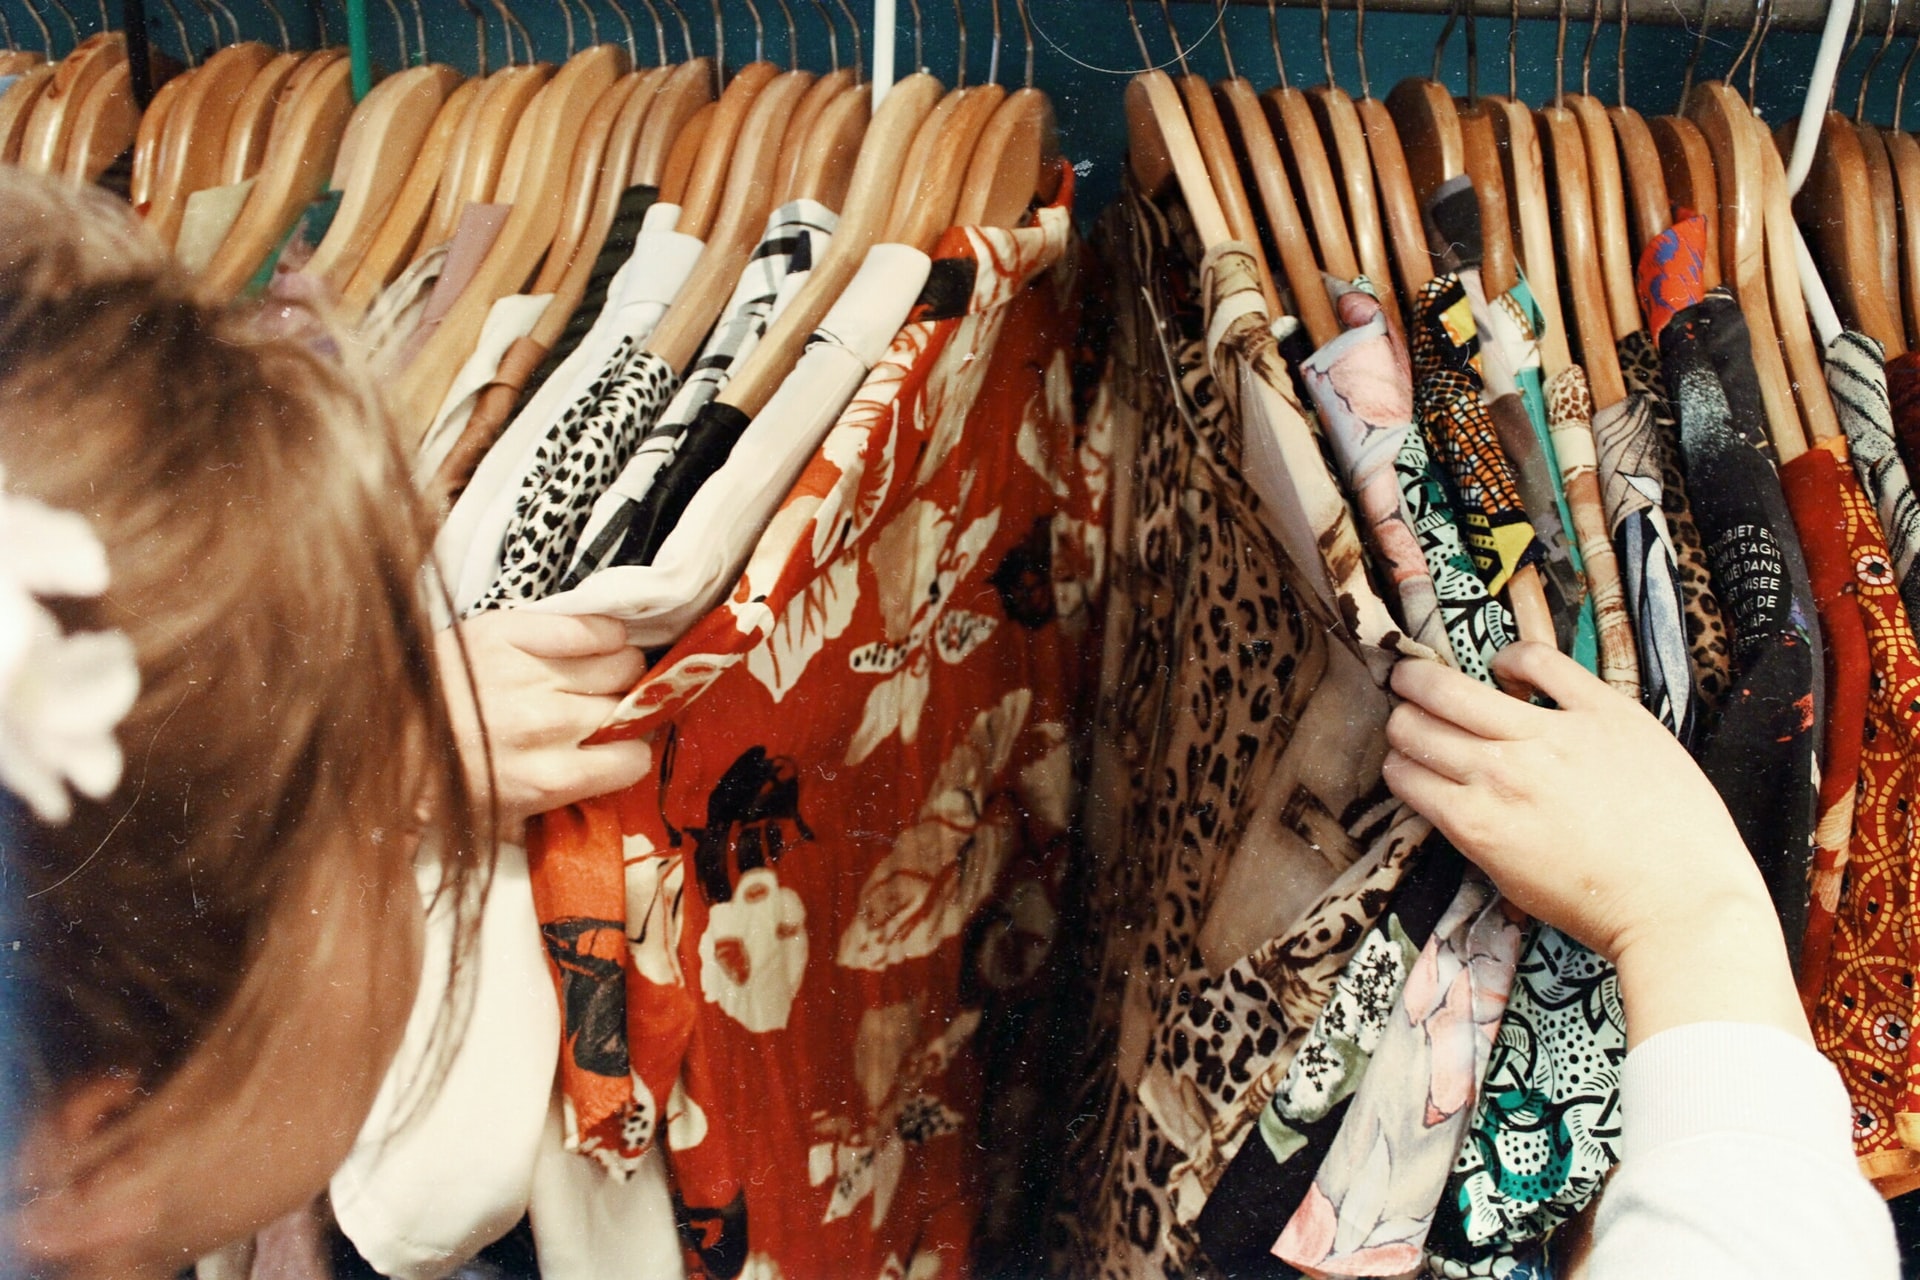 Shopping retail clothes rack